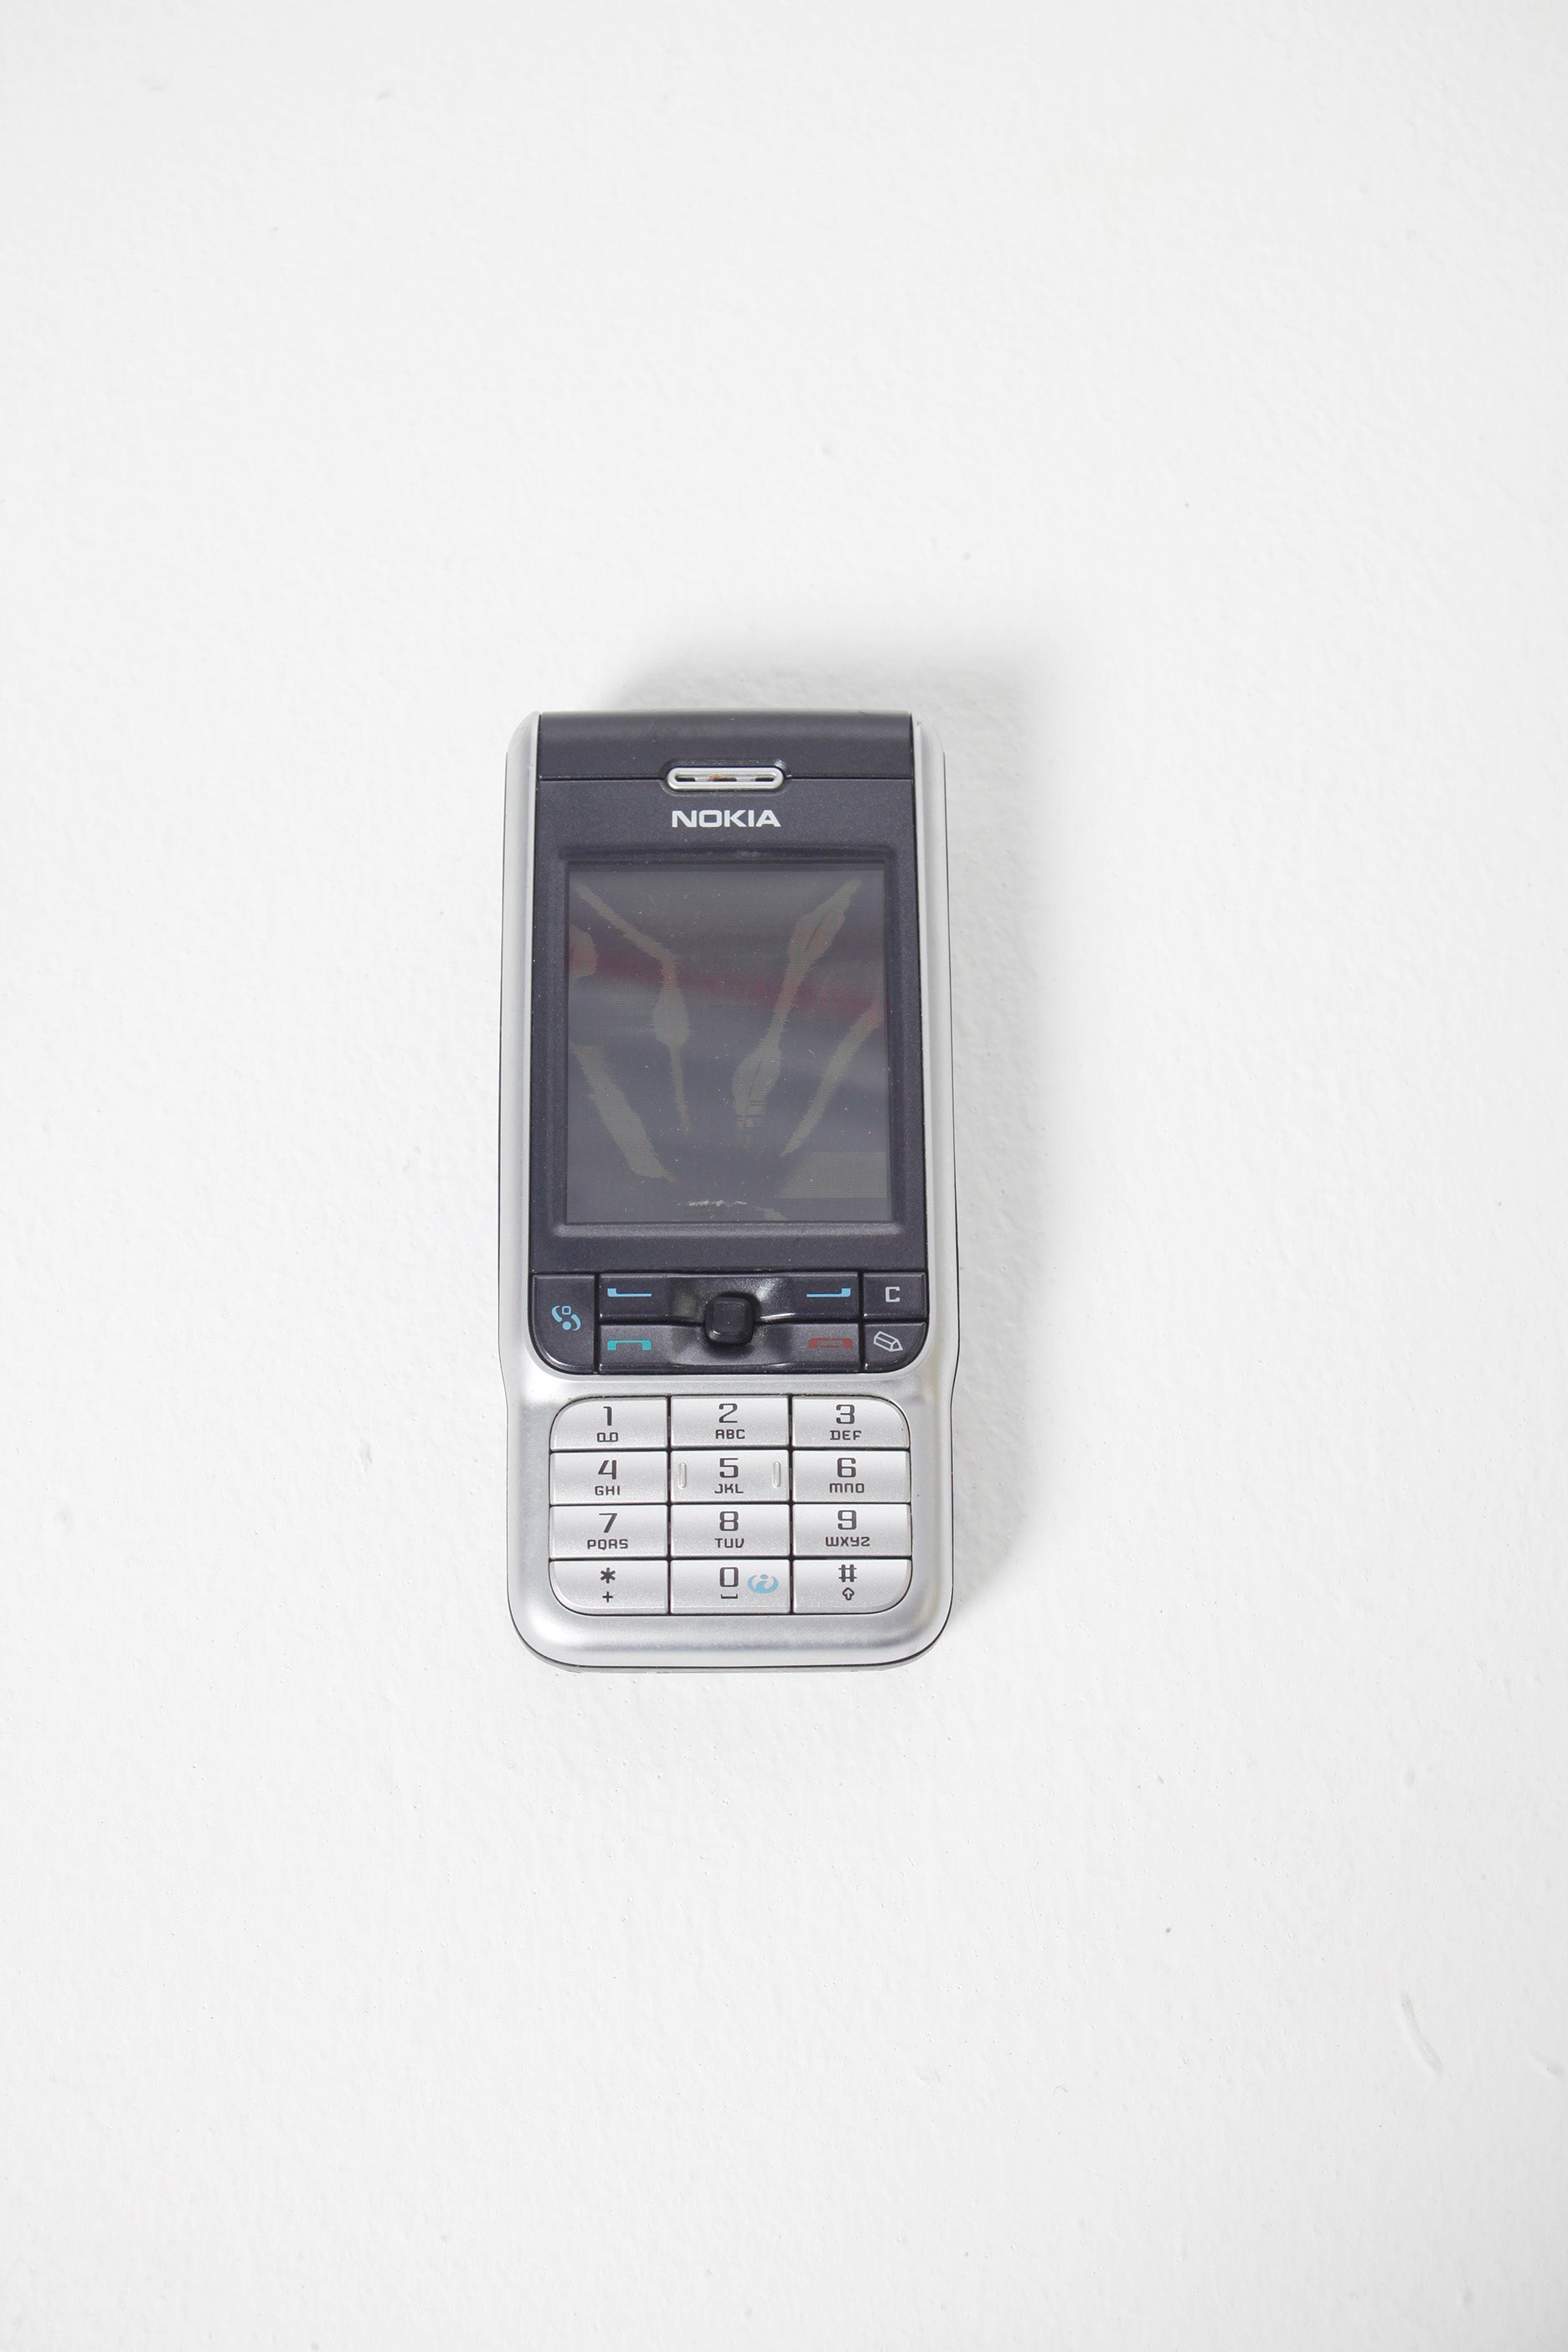 Nokia 3230 Mobile Phone